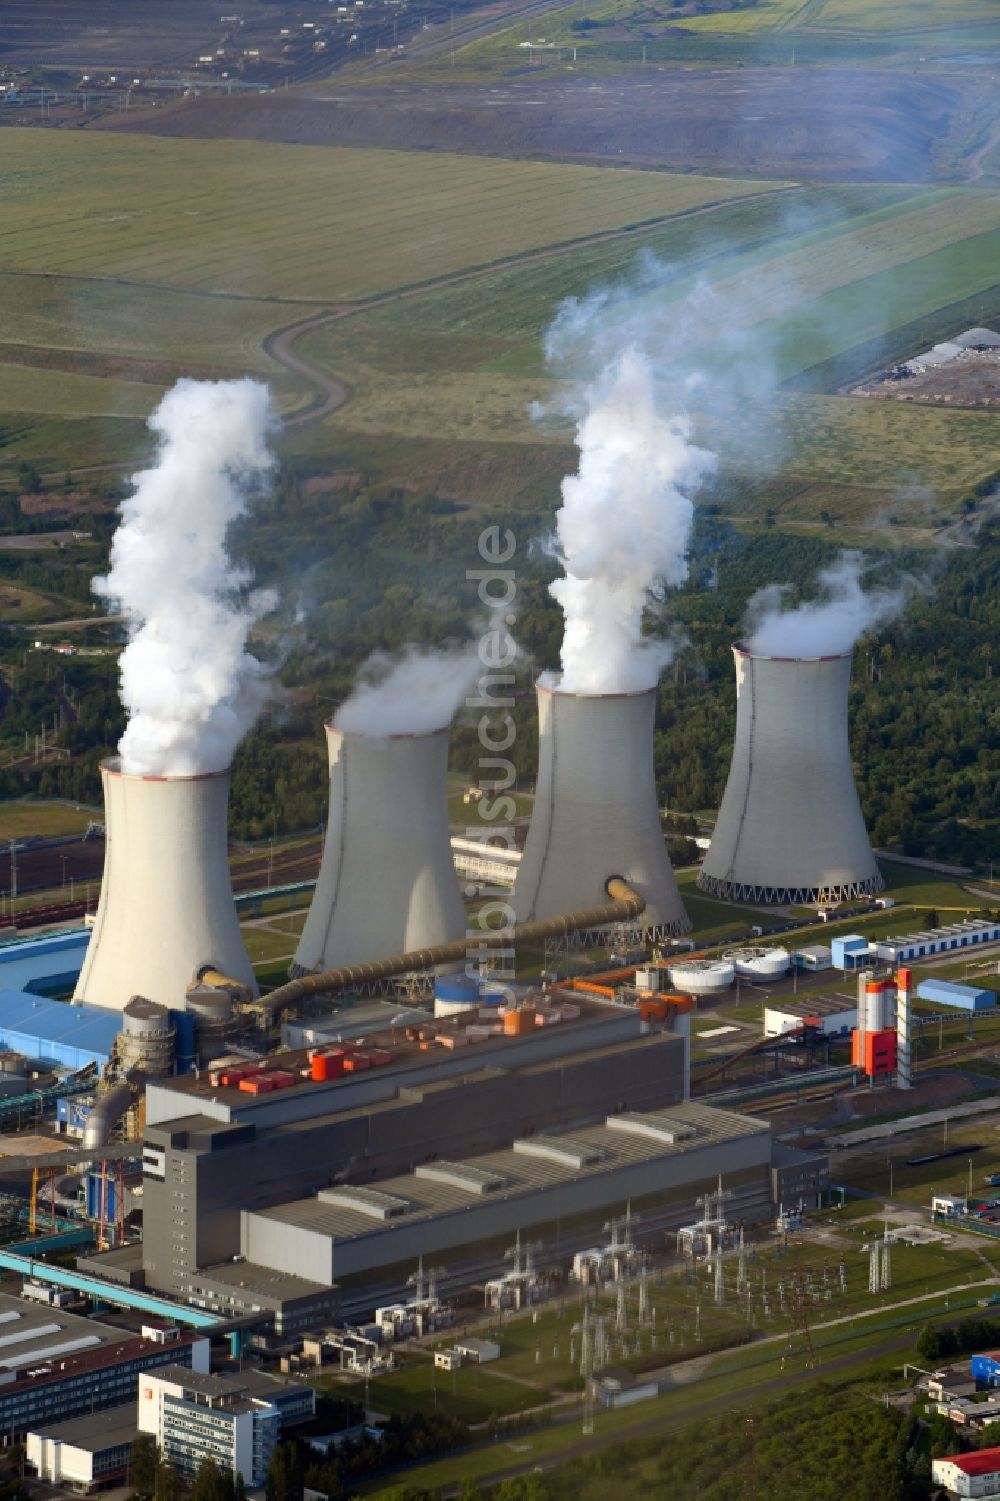 Luftbild Kadan - Abgaswolken aus den Schloten der Kraftwerksanlagen des Kohle- Heizkraftwerkes CEZ Energeticke produkty s.r.o. Kraftwerk Tusimice in Kadan in Ustecky kraj - Aussiger Region, Tschechien